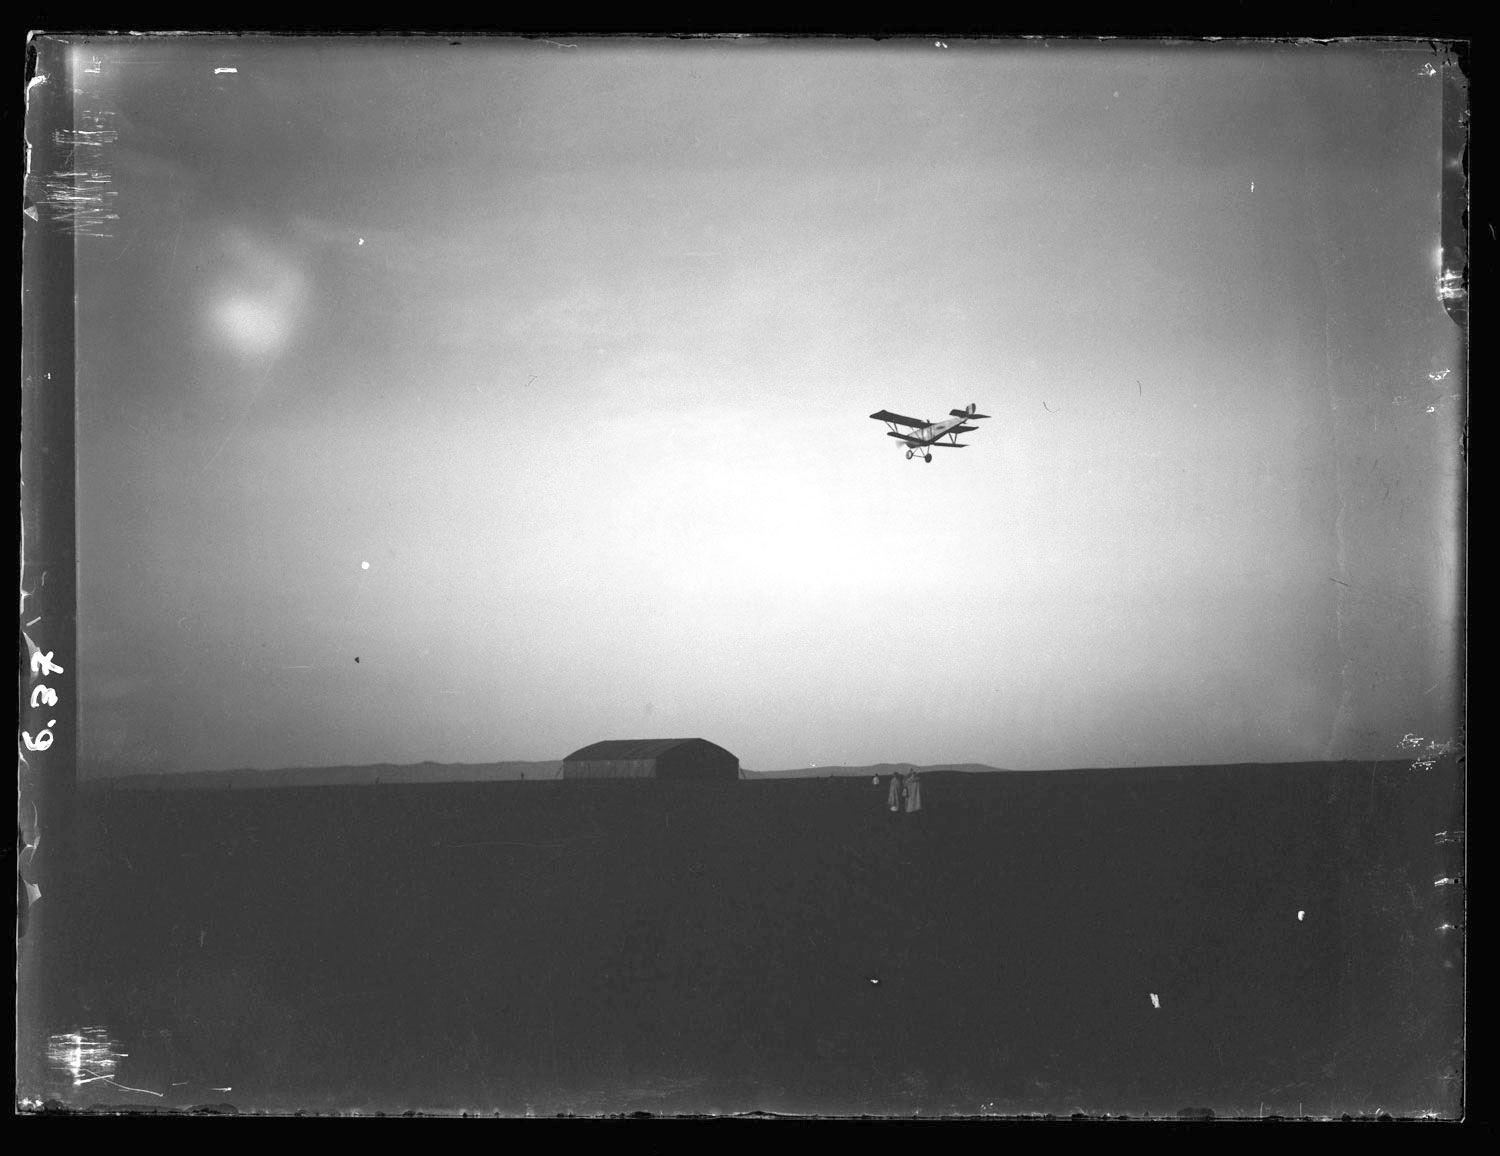 Aeroport Ibn Battouta de Tanger - Men stand on farm as a plane flies overhead.